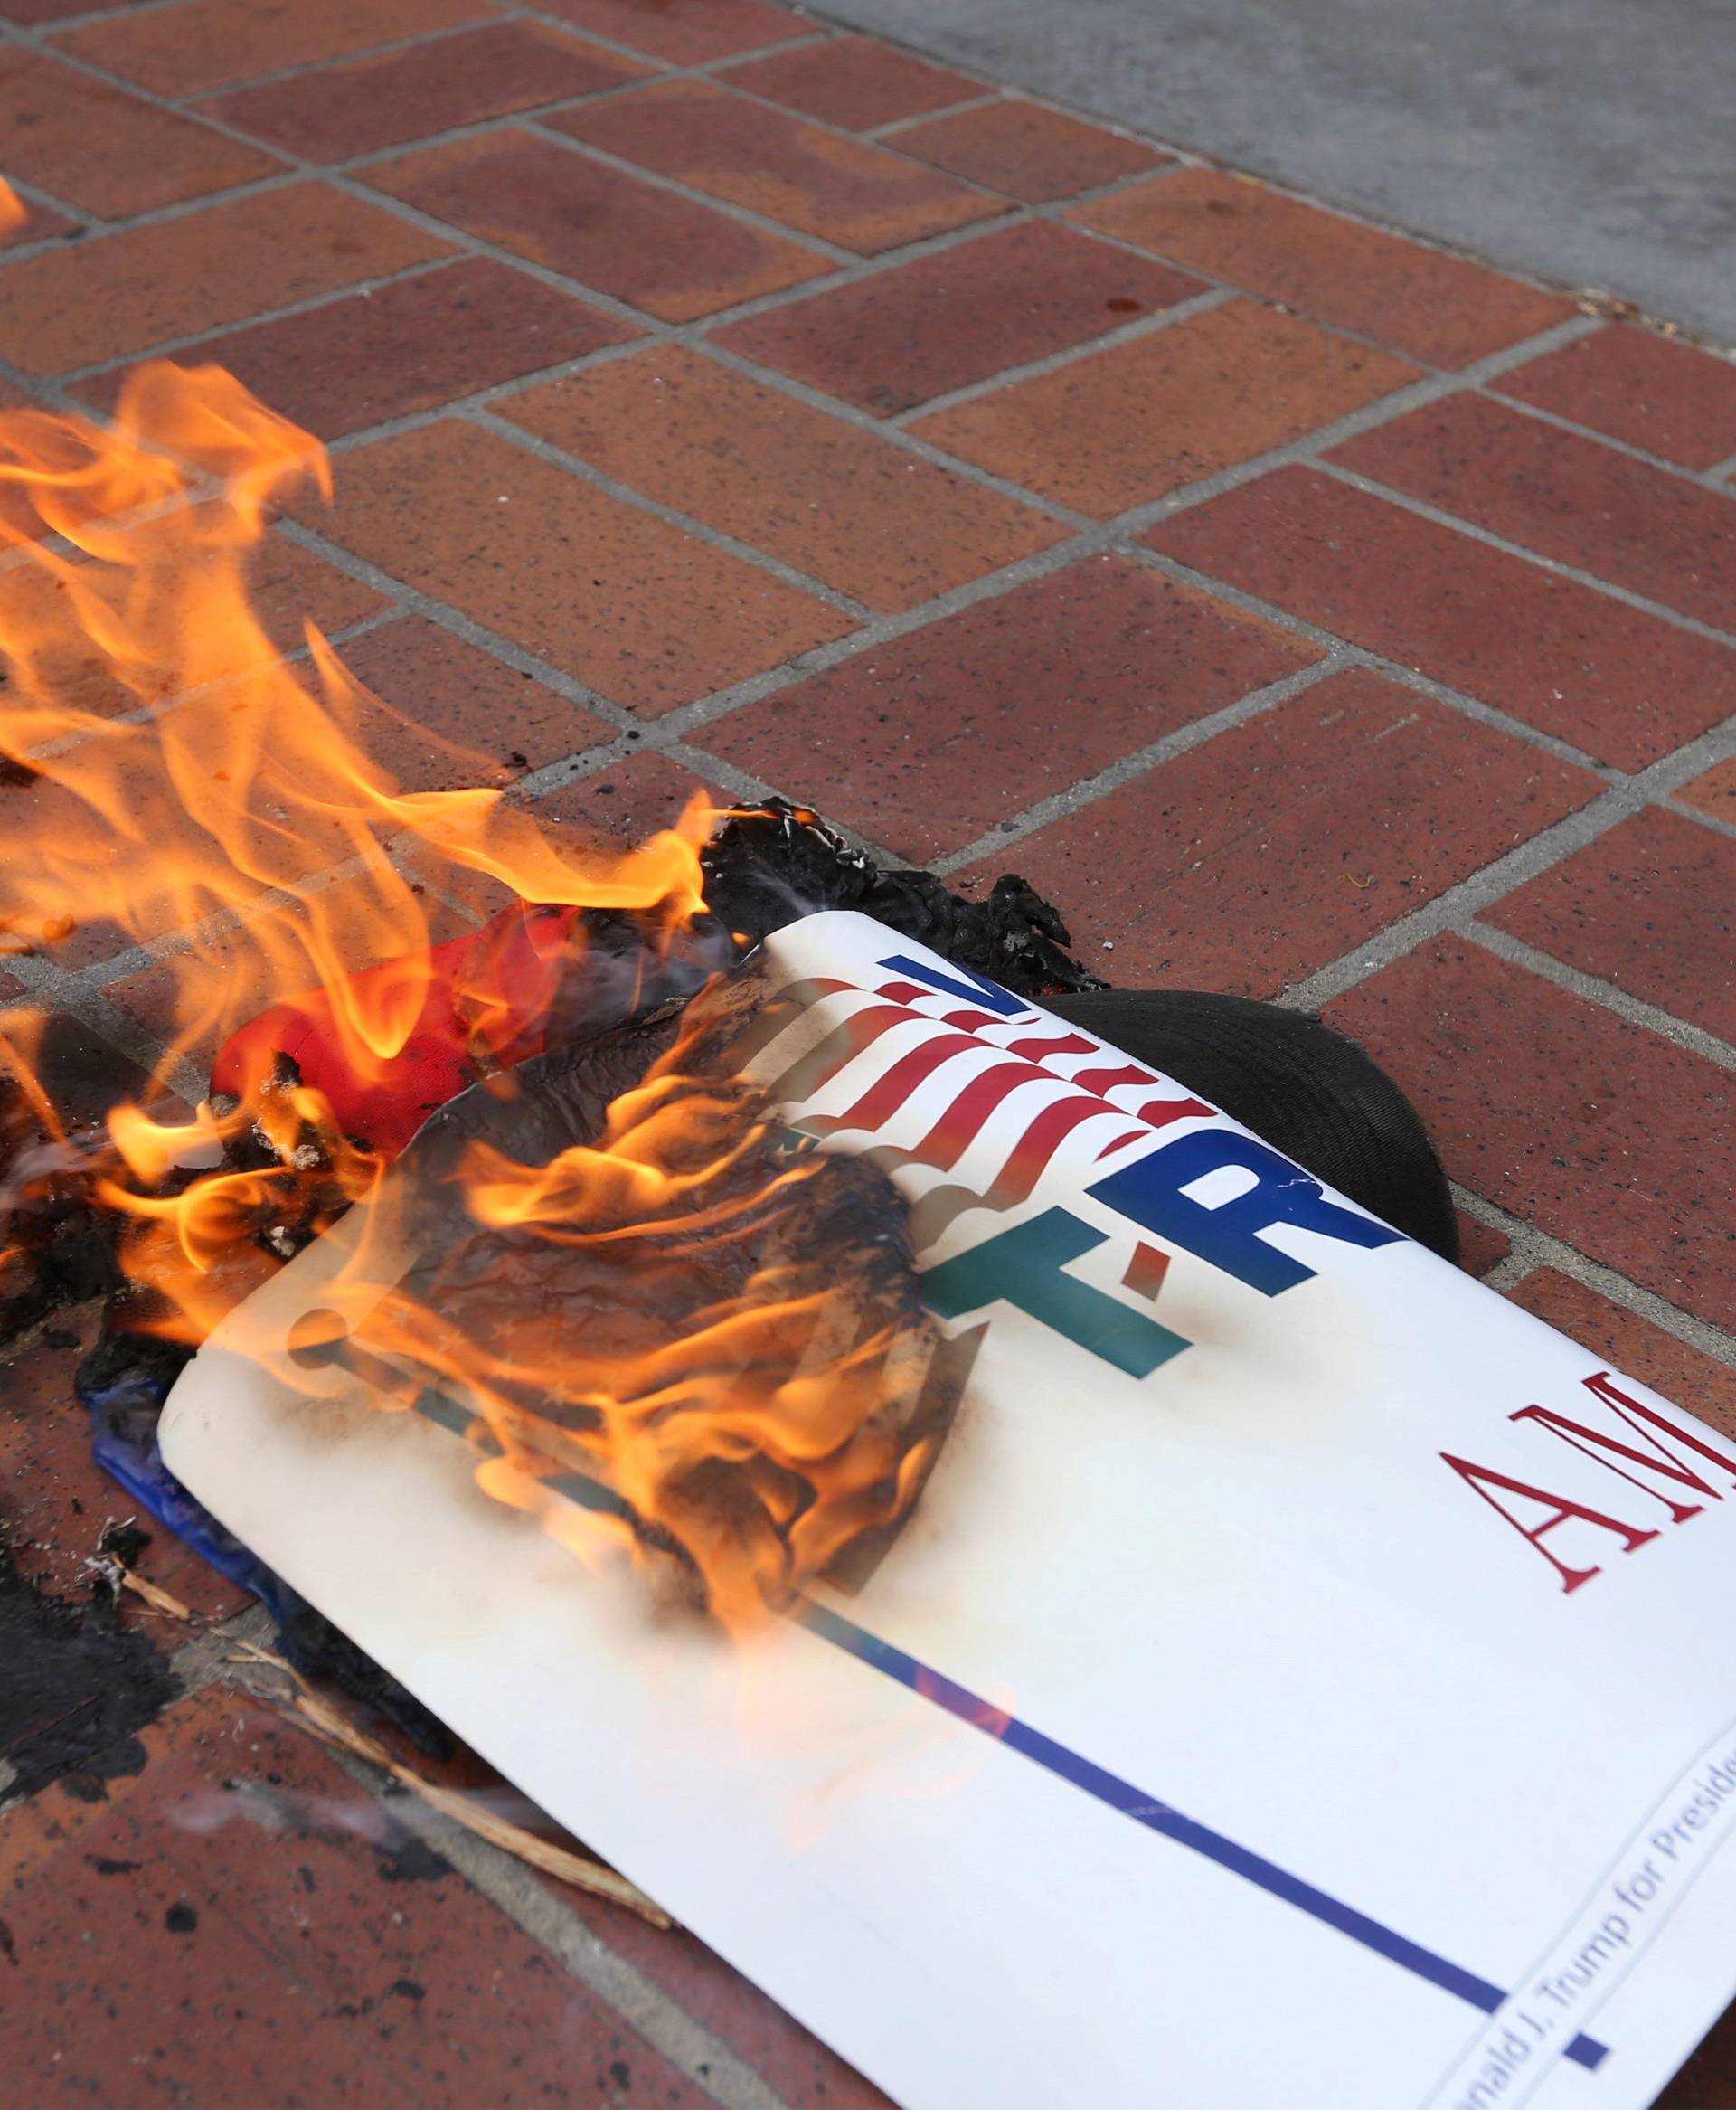 Anti-Trump demonstrators burn Trump's campaign items outside a campaign event for Republican U.S. presidential candidate Donald Trump in San Diego